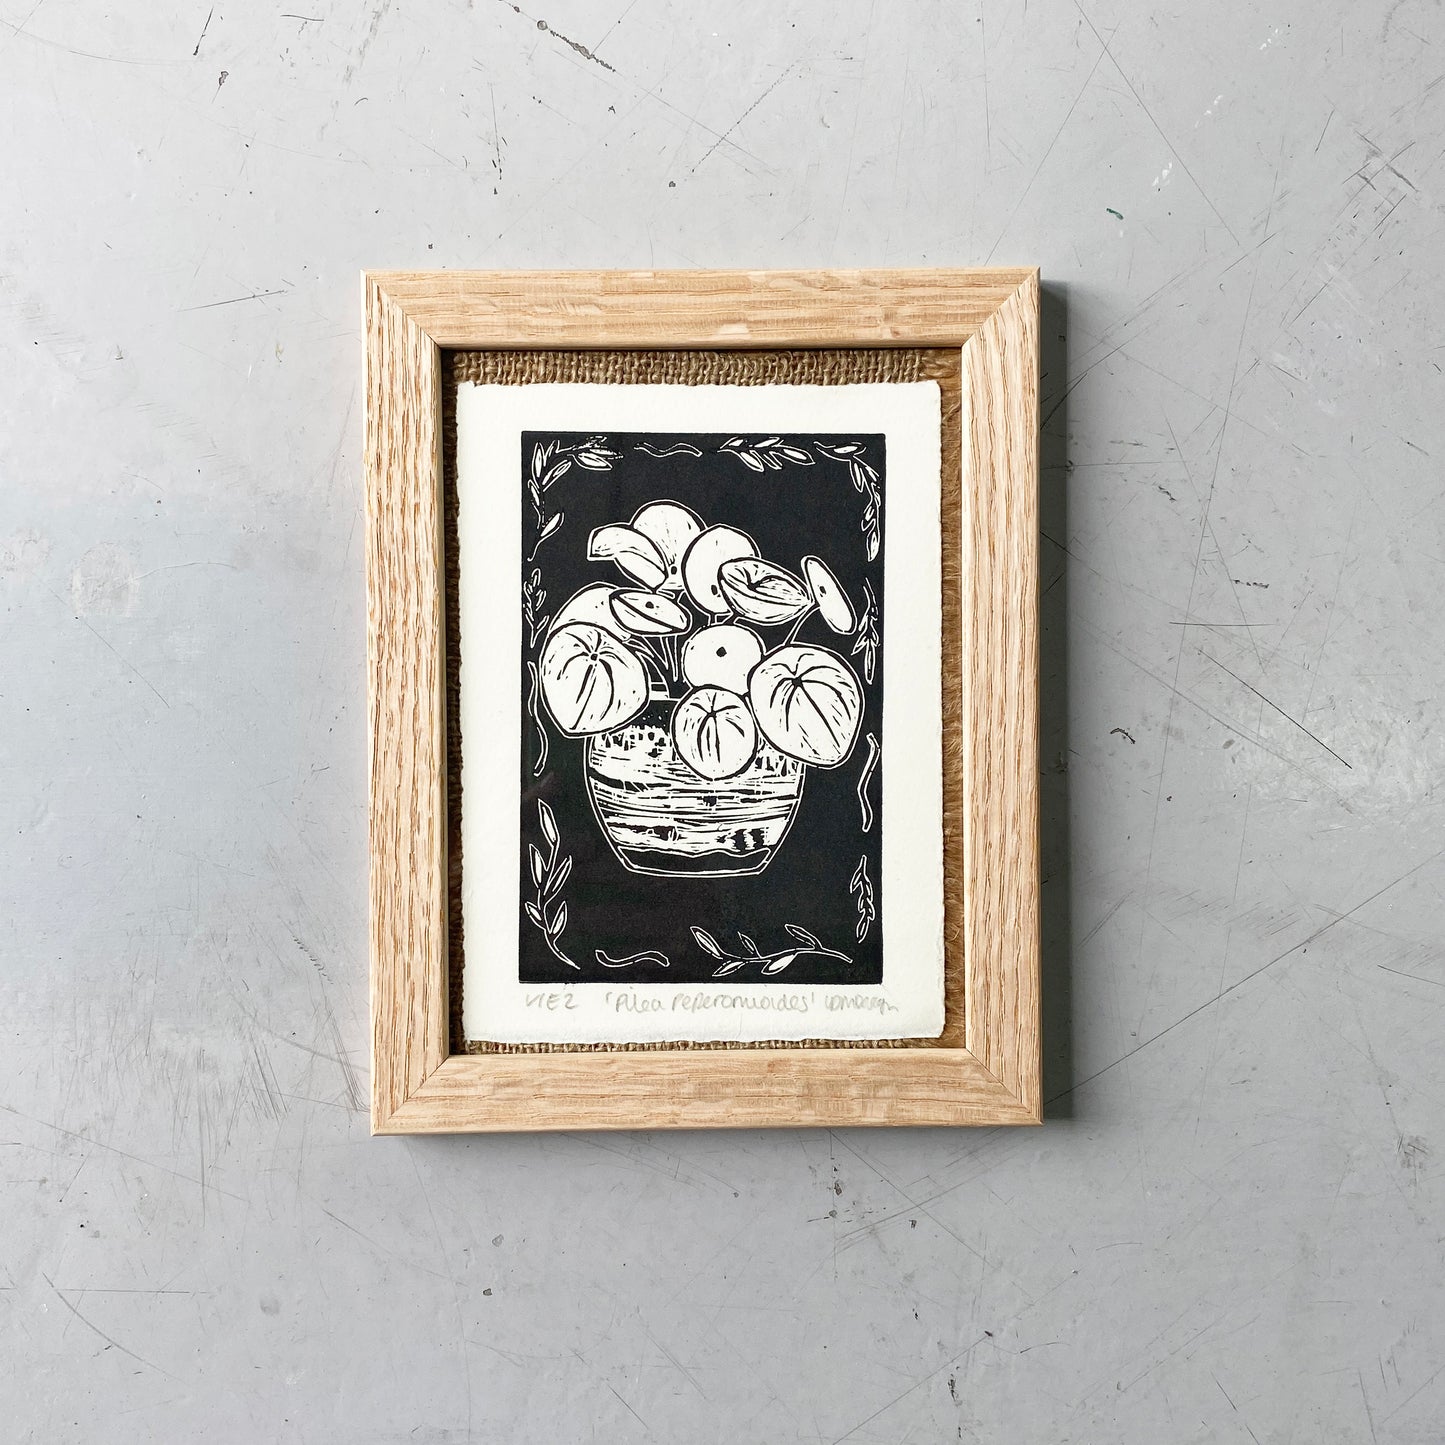 Pilea Framed Lino cut print by LDMDesign